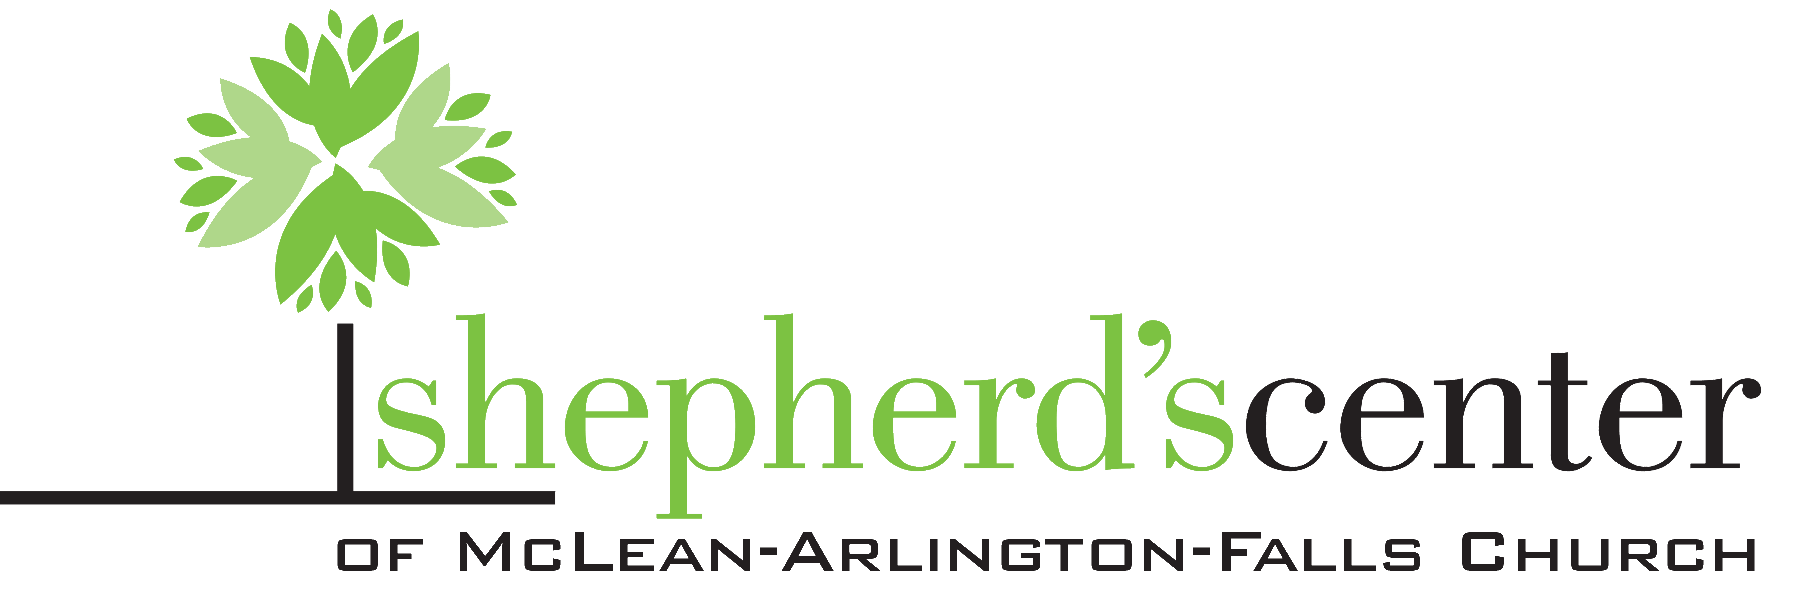 The Shepherd’s Center of McLean-Arlington-Falls Church (SCMAFC)